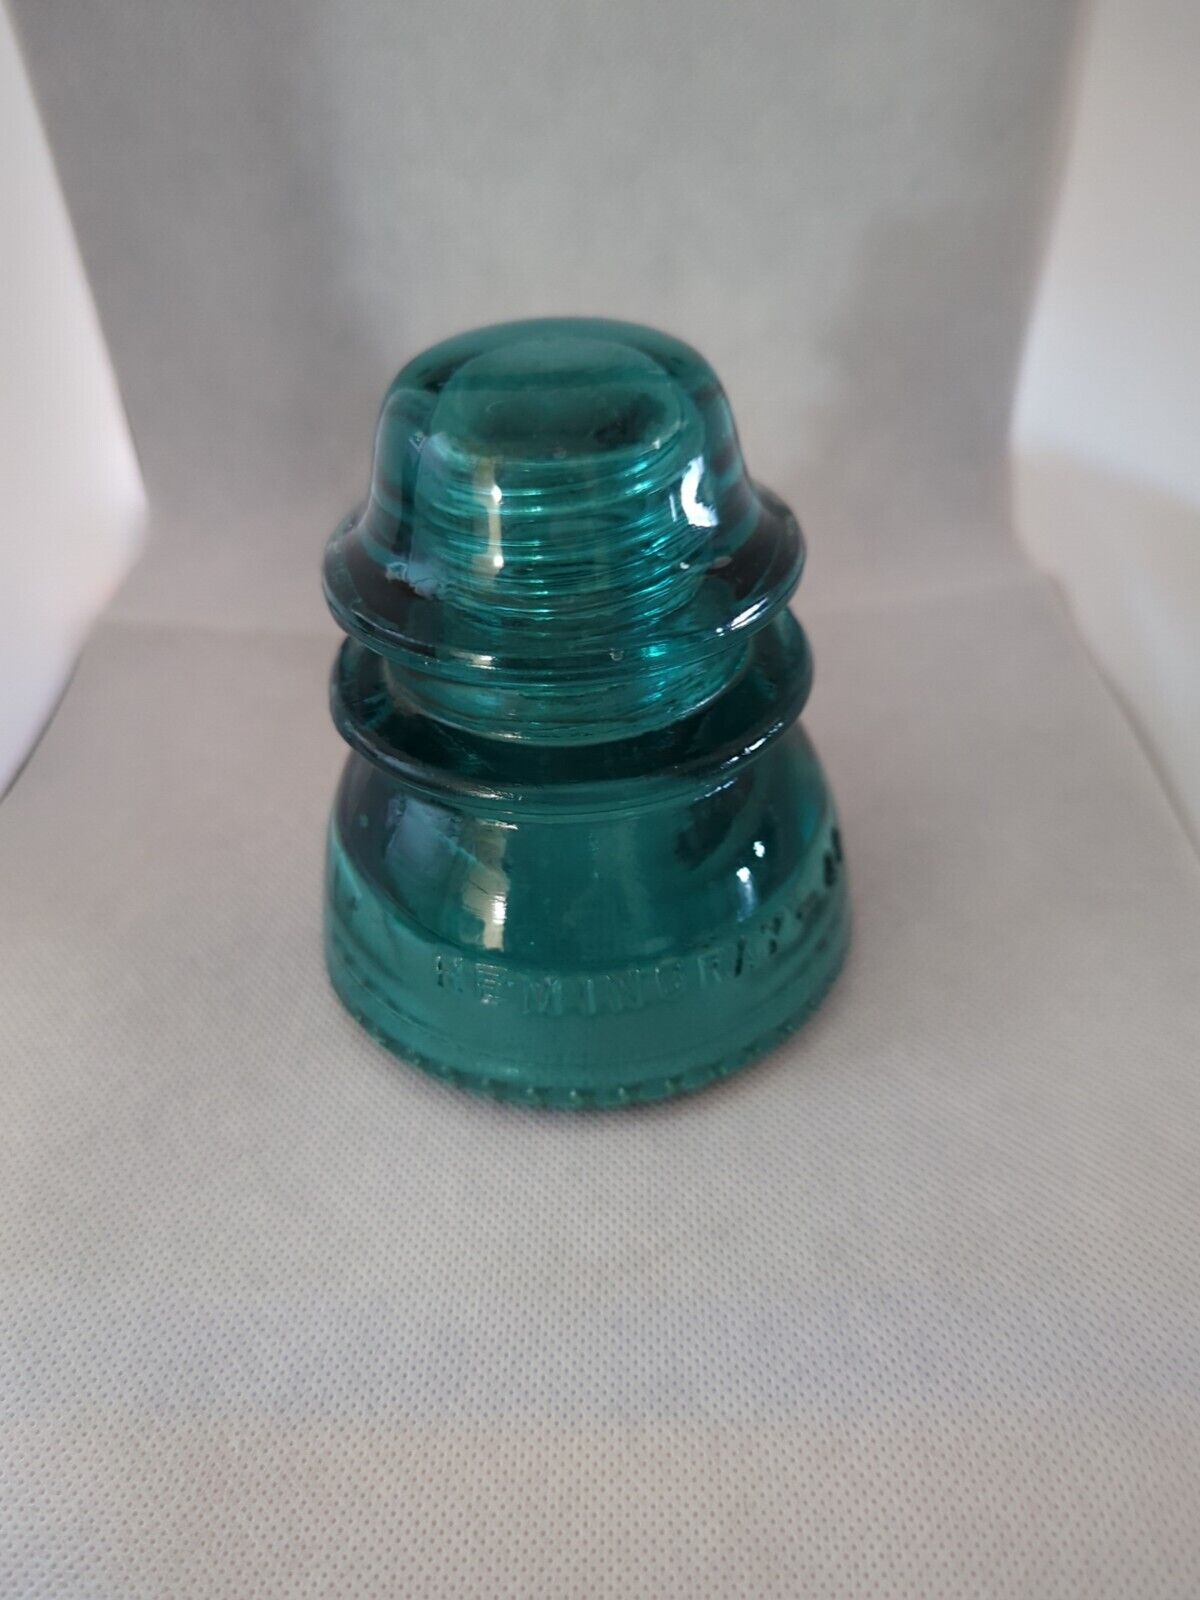 Aqua (Blue/Green)  Hemingray 42 Electrical Glass Insulator - Made in USA